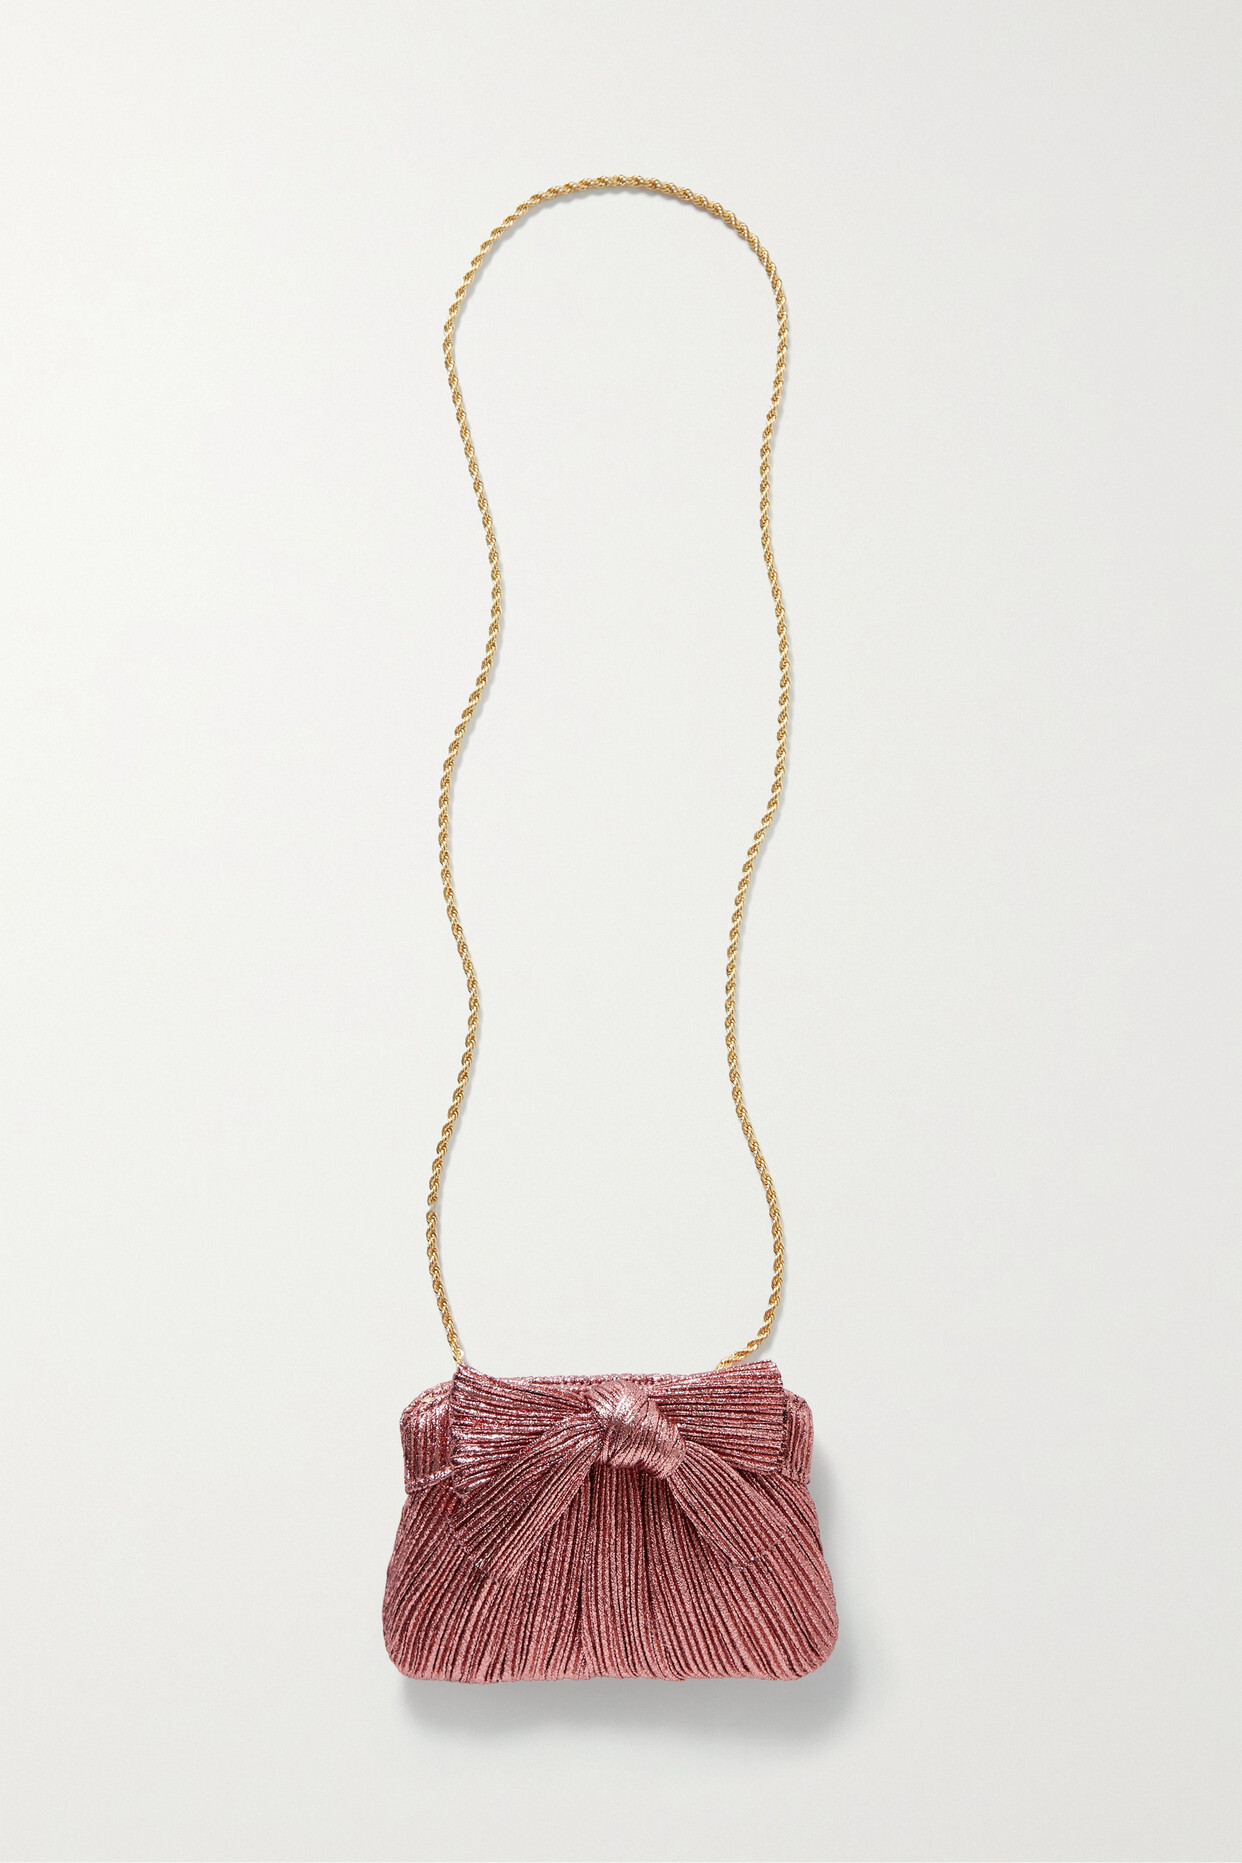 Loeffler Randall - Rochelle Bow-embellished Plissé-lamé Clutch - Pink